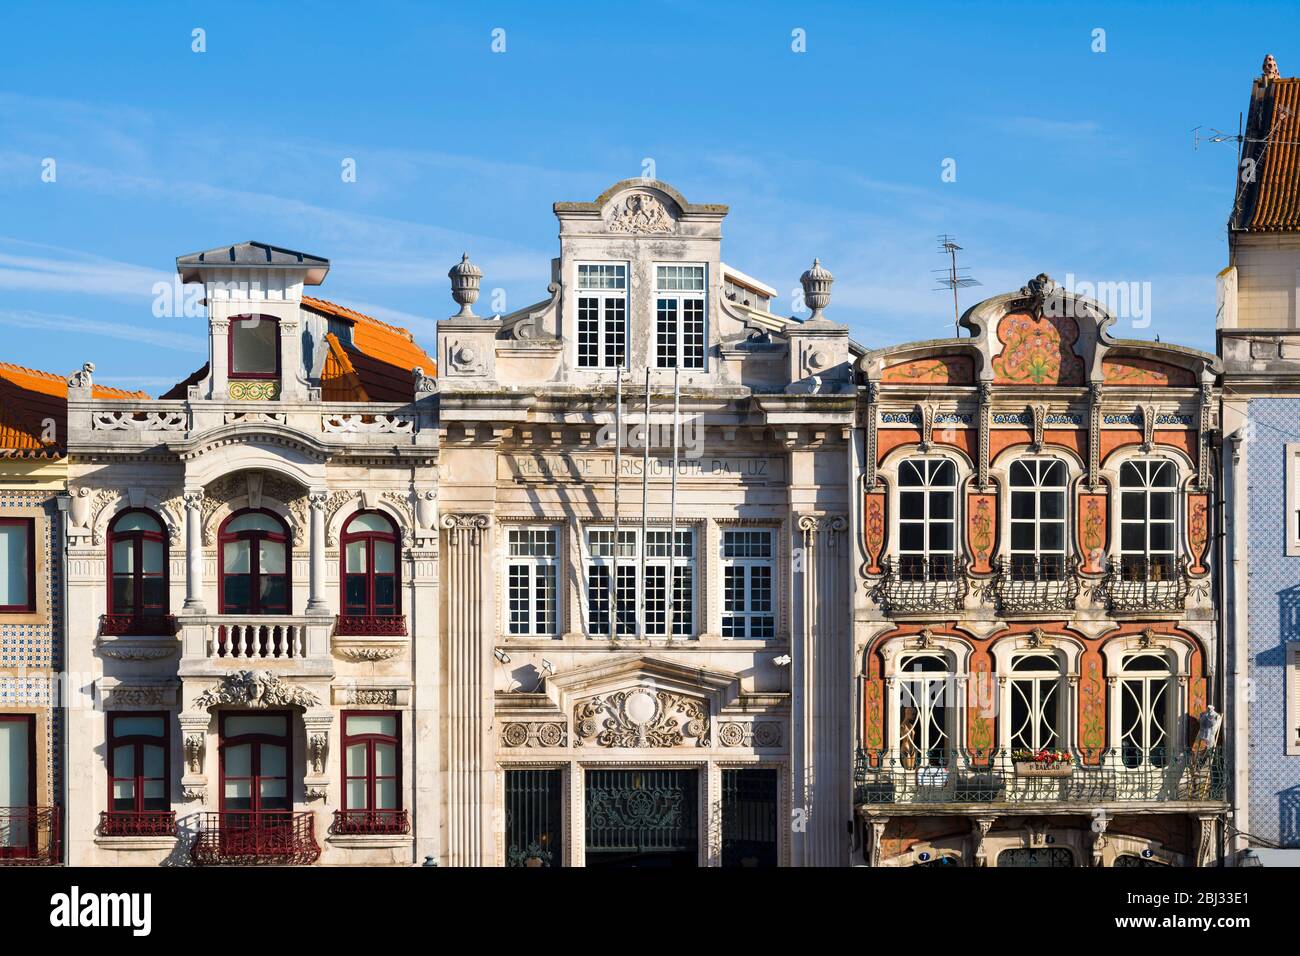 Elegante arquitectura portuguesa de edificios ornamentados junto al canal central en Aveiro, Portugal Foto de stock